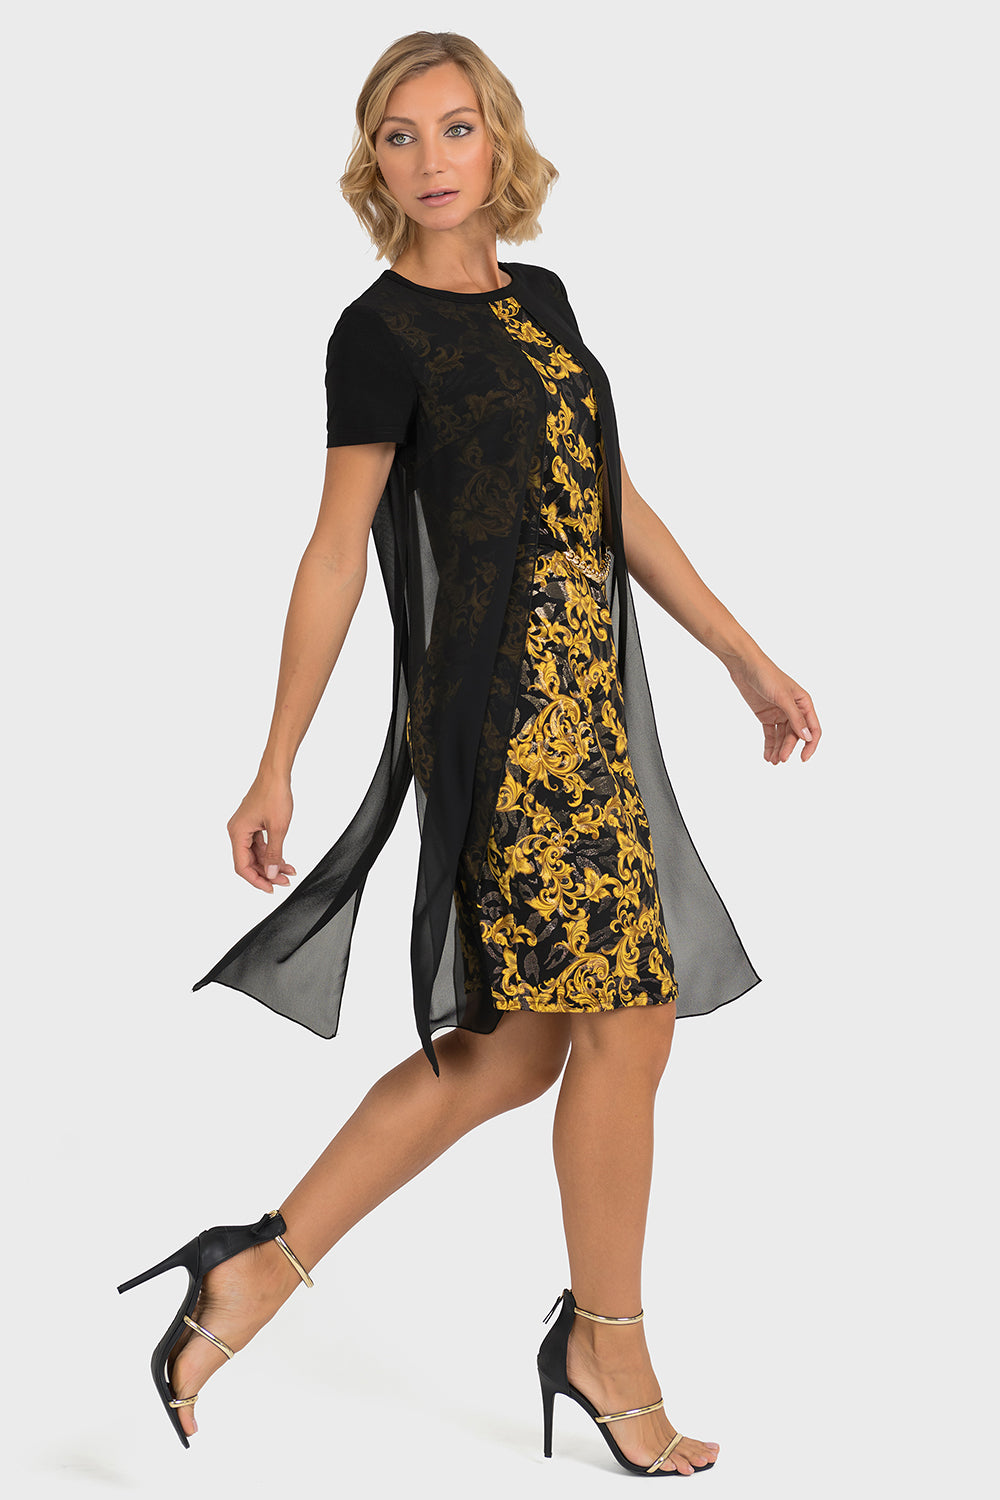 Joseph Ribkoff Black-Gold Dress Style 193698